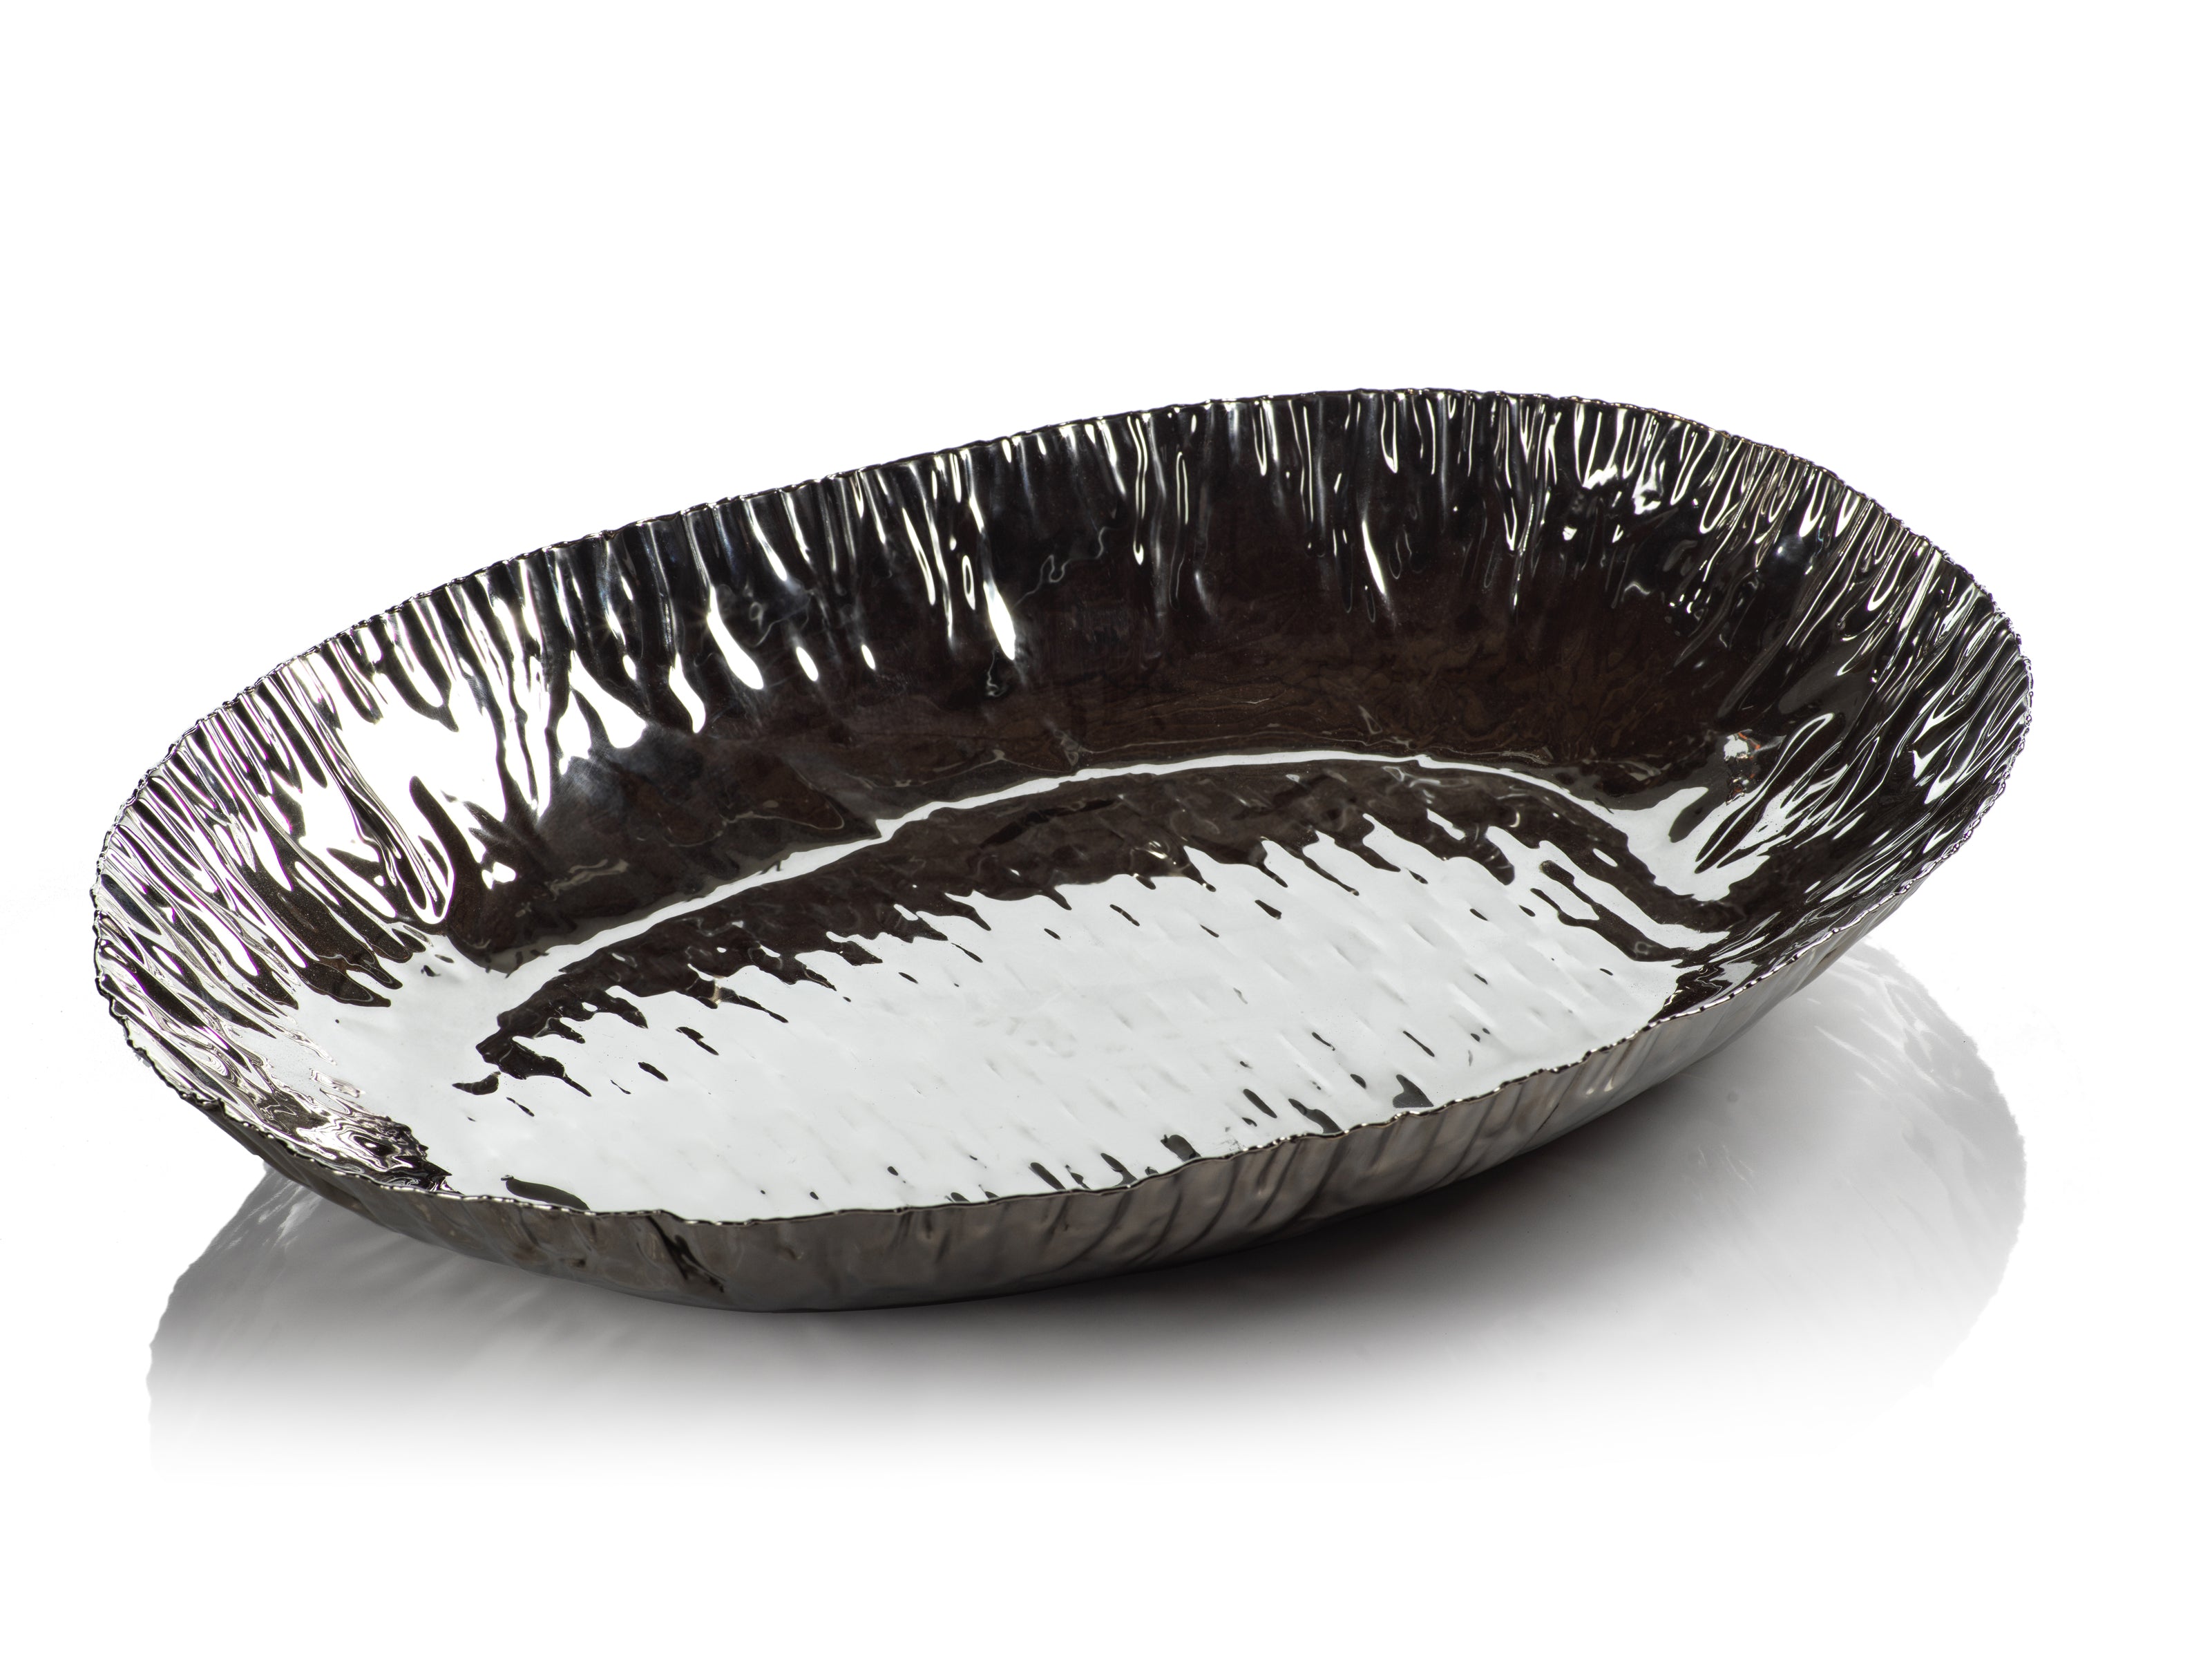 Shiny Polished Steel Crumpled Bowl - CARLYLE AVENUE